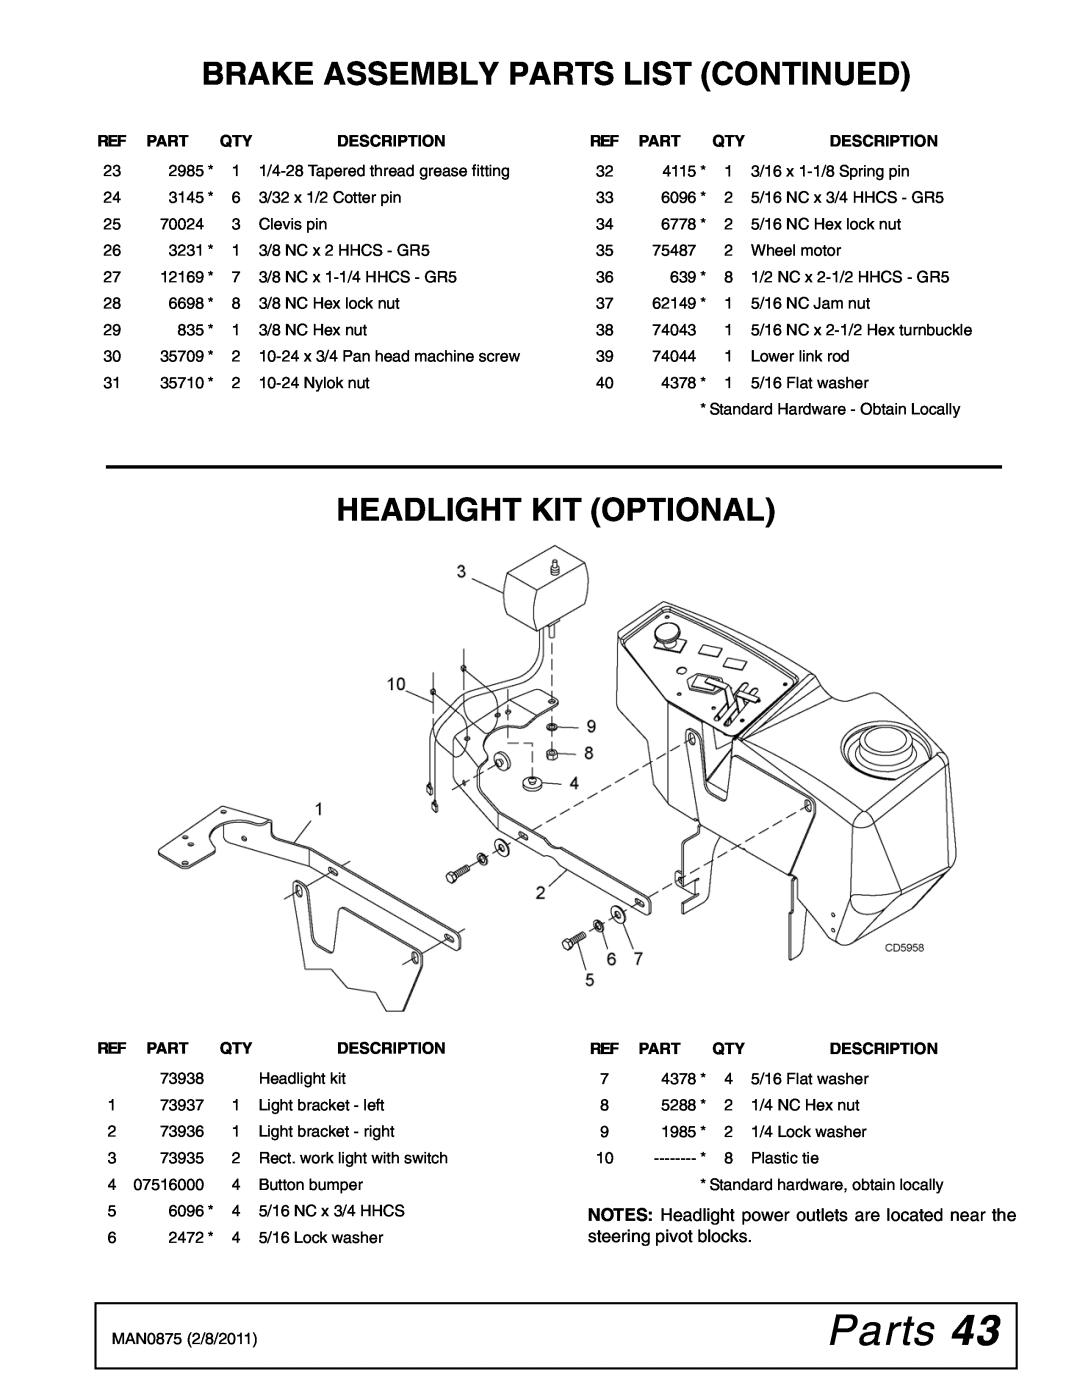 Woods Equipment FZ23B, FZ28K manual Brake Assembly Parts List Continued, Headlight Kit Optional, steering pivot blocks 